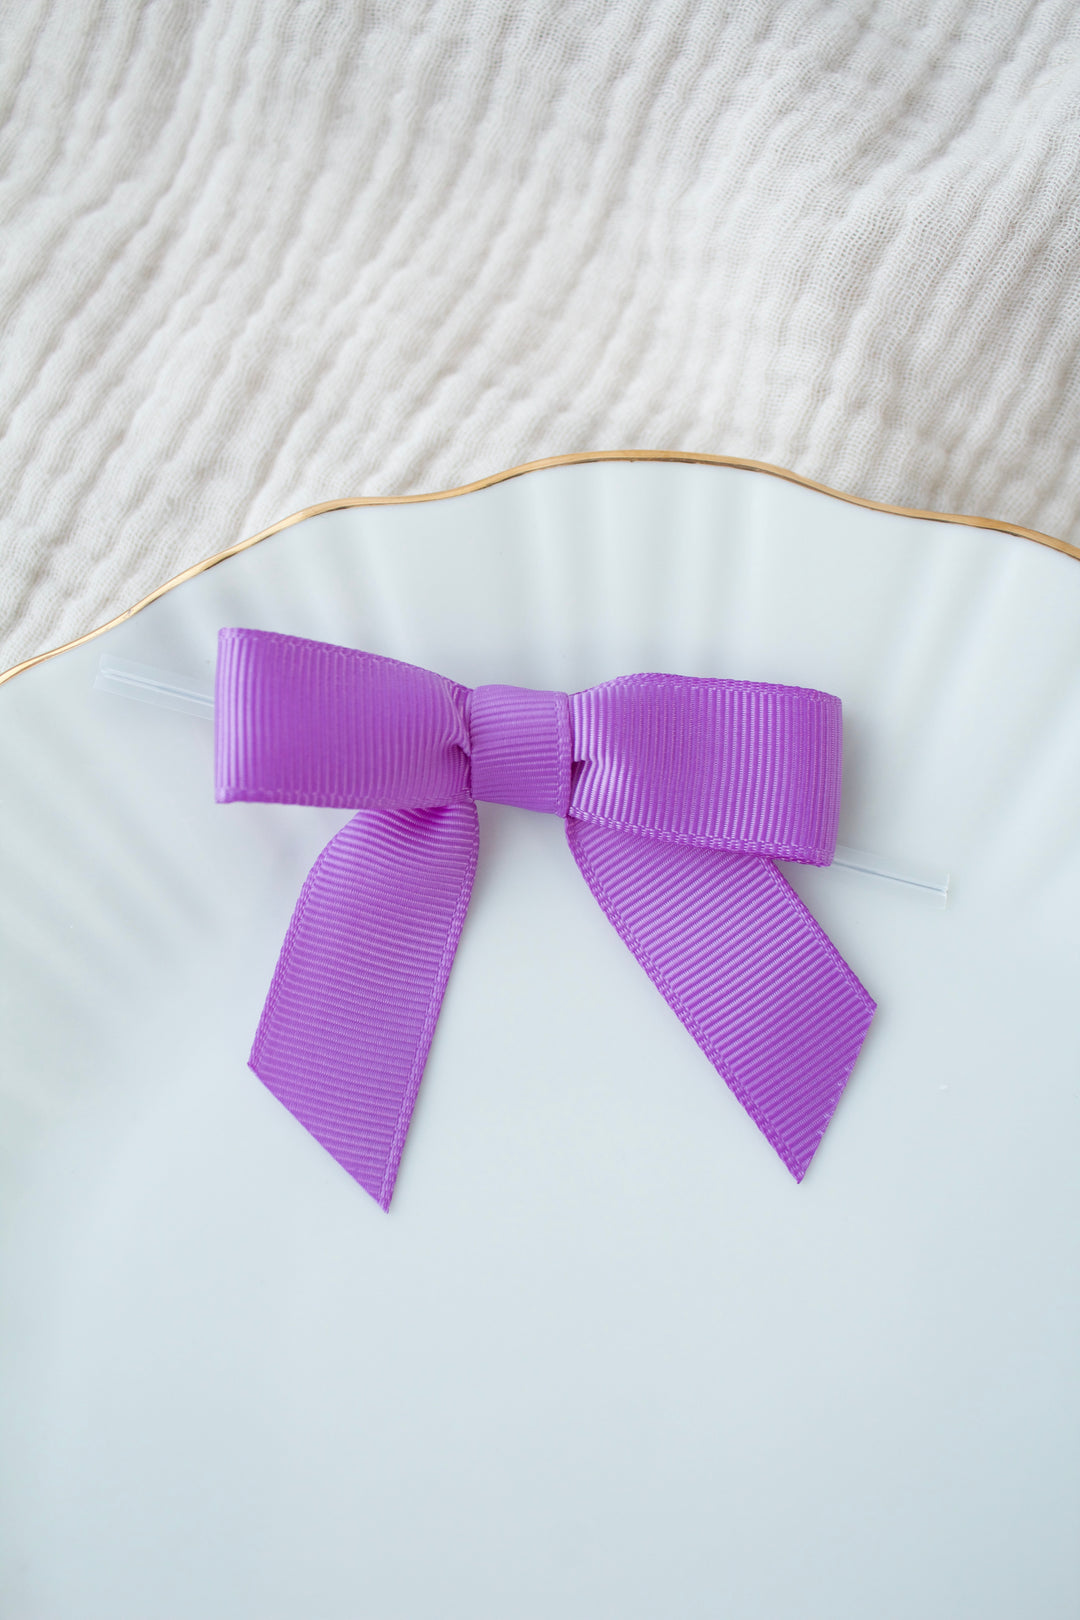 Purple - Grosgrains pre-tied bows (20pcs) with clear twist tie